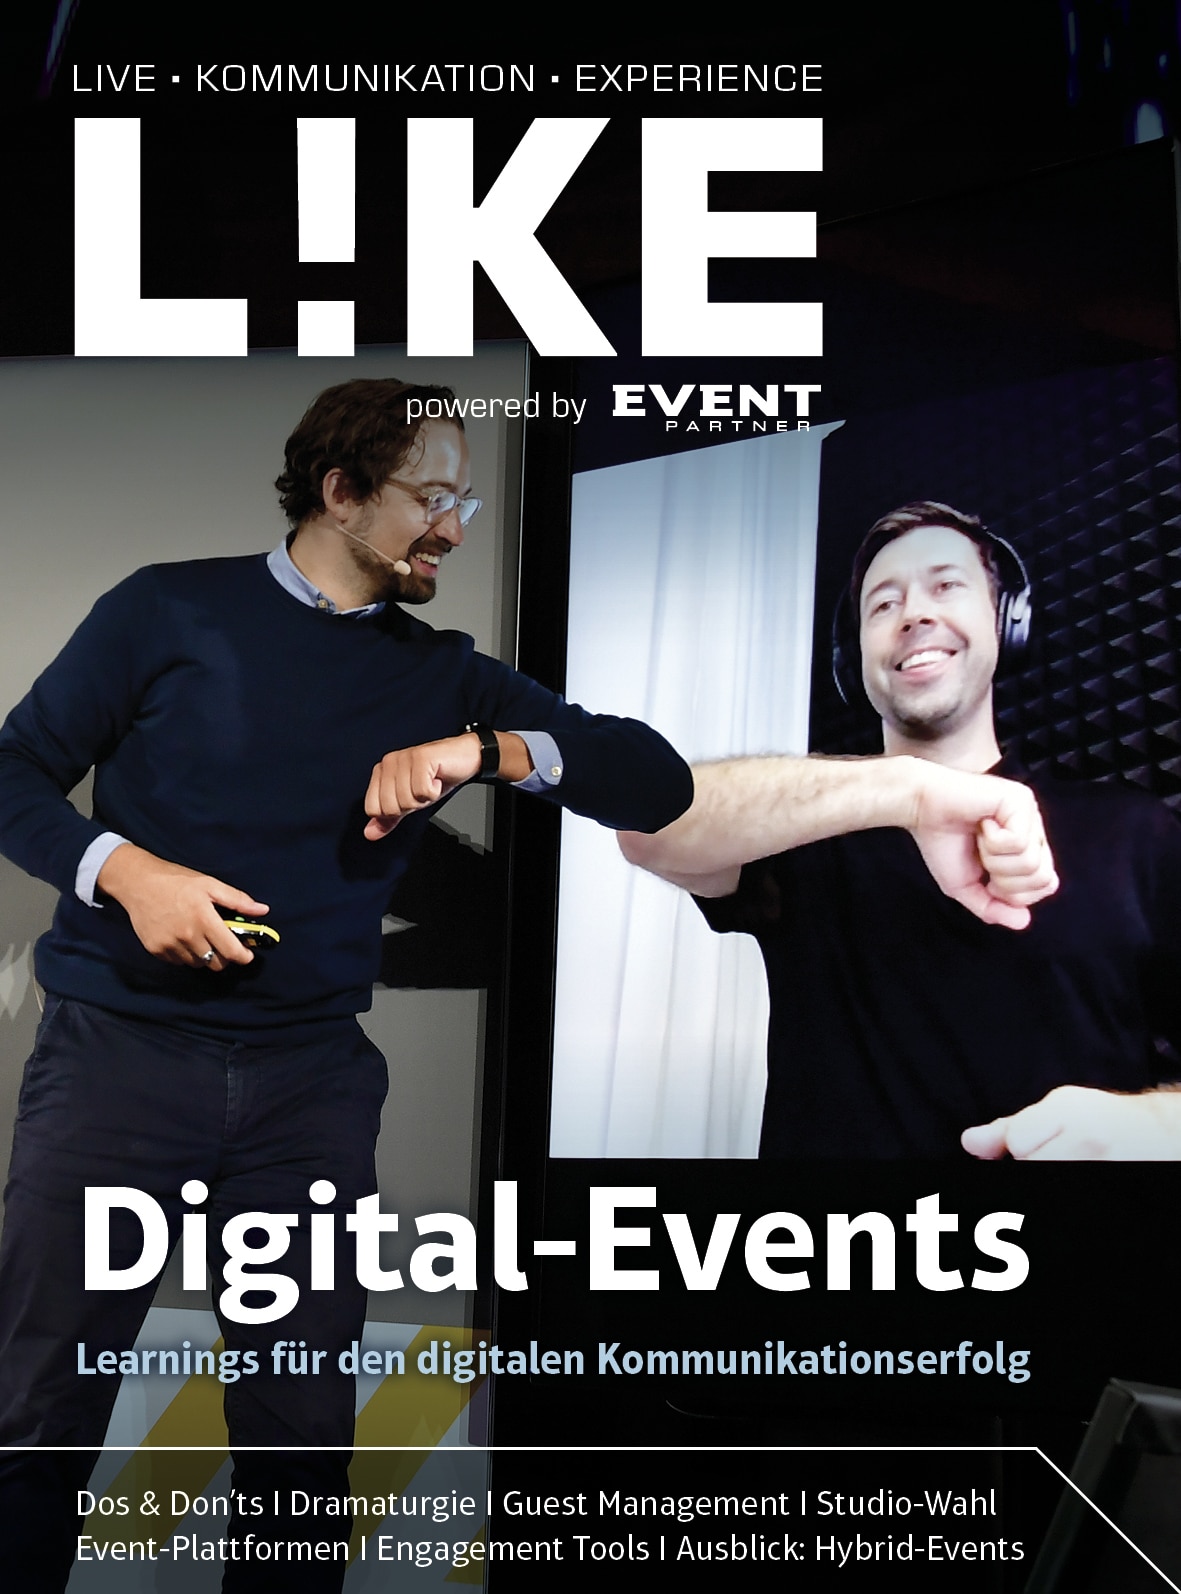 Special Digital-Events